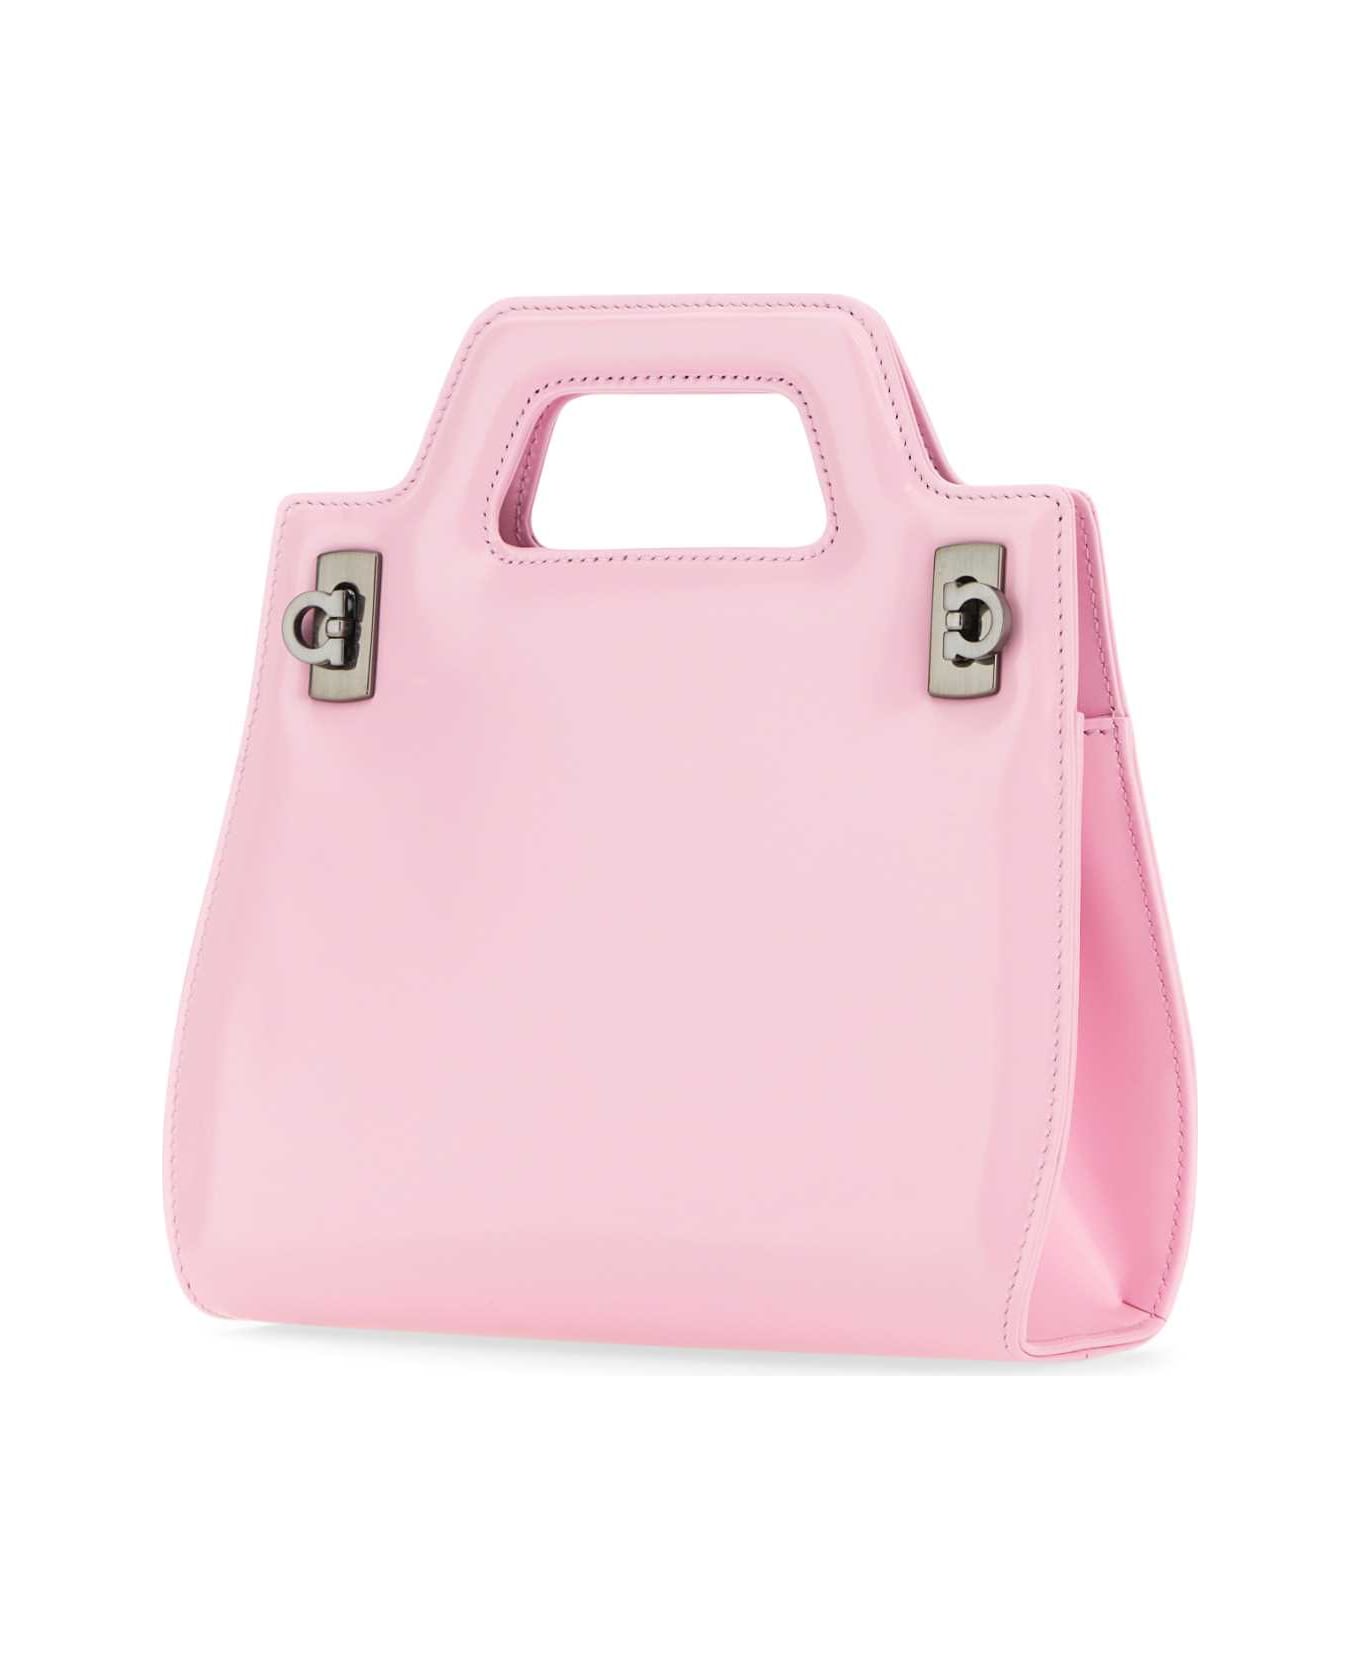 Ferragamo Pink Leather Mini Wanda Handbag - PINK